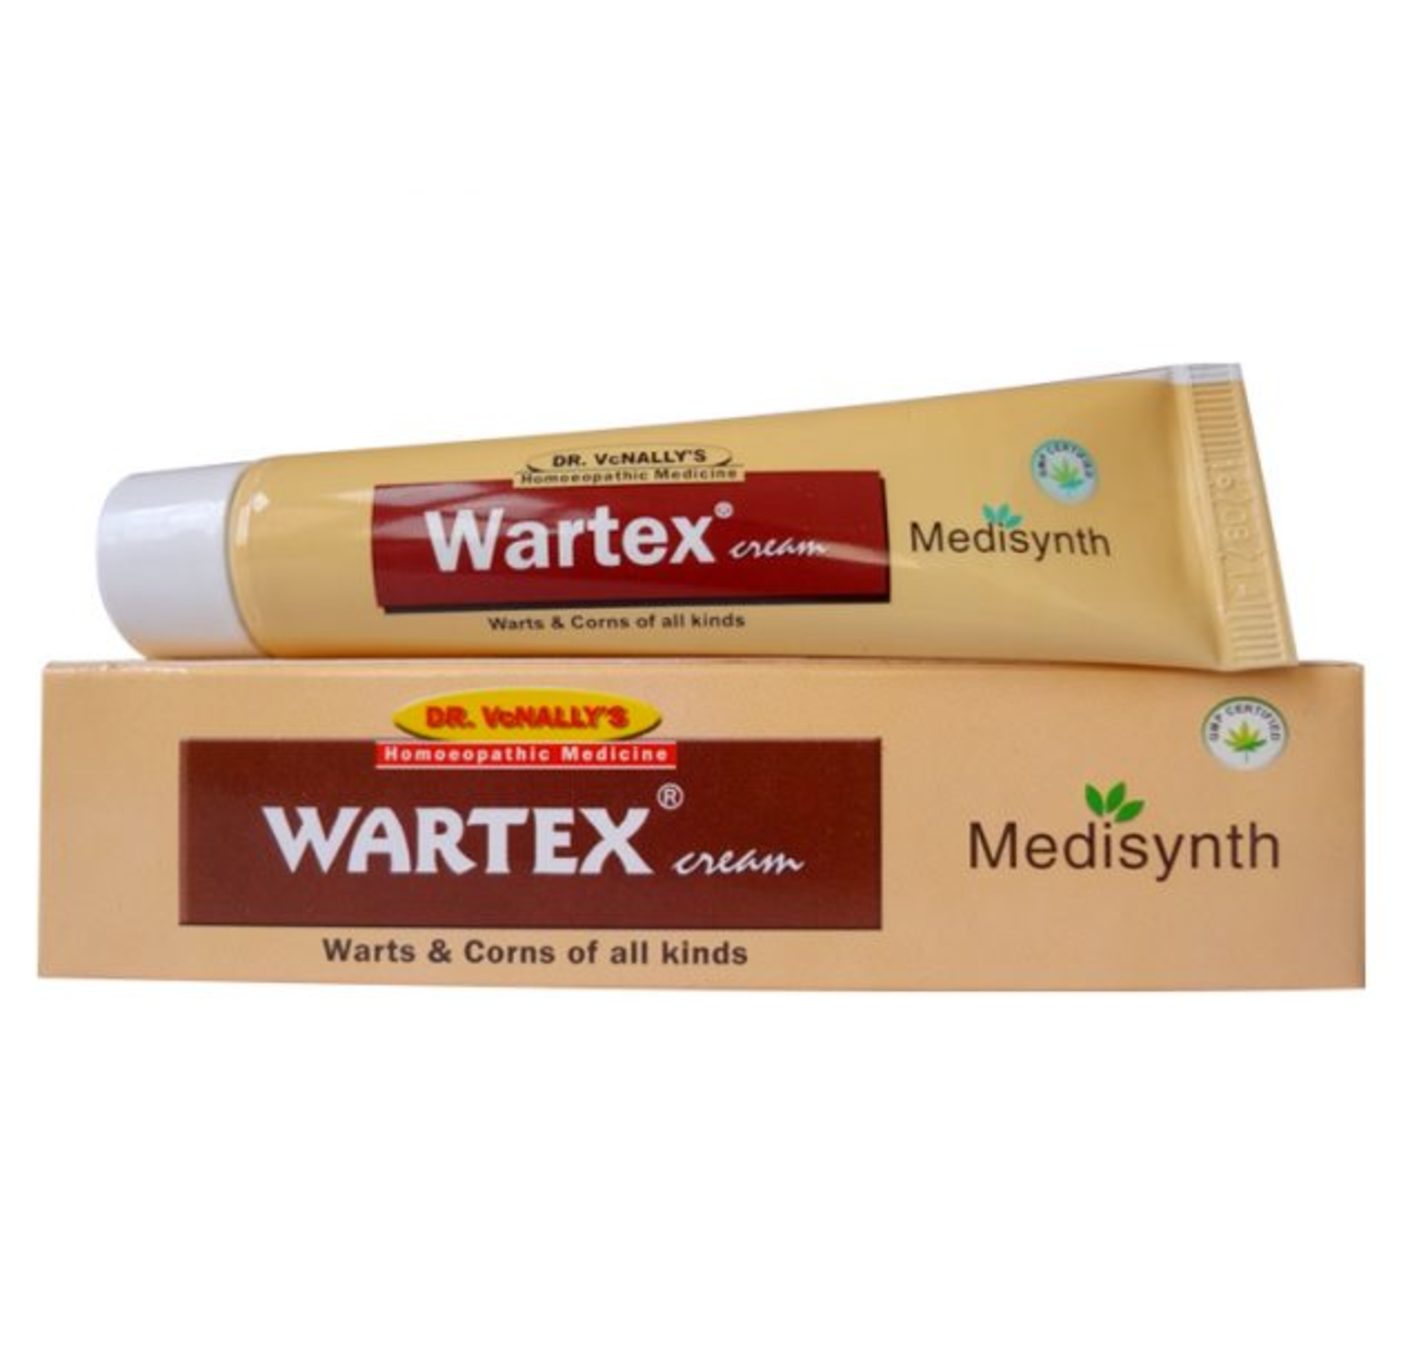 Medisynth Wartex Cream Homeopathic Medicine